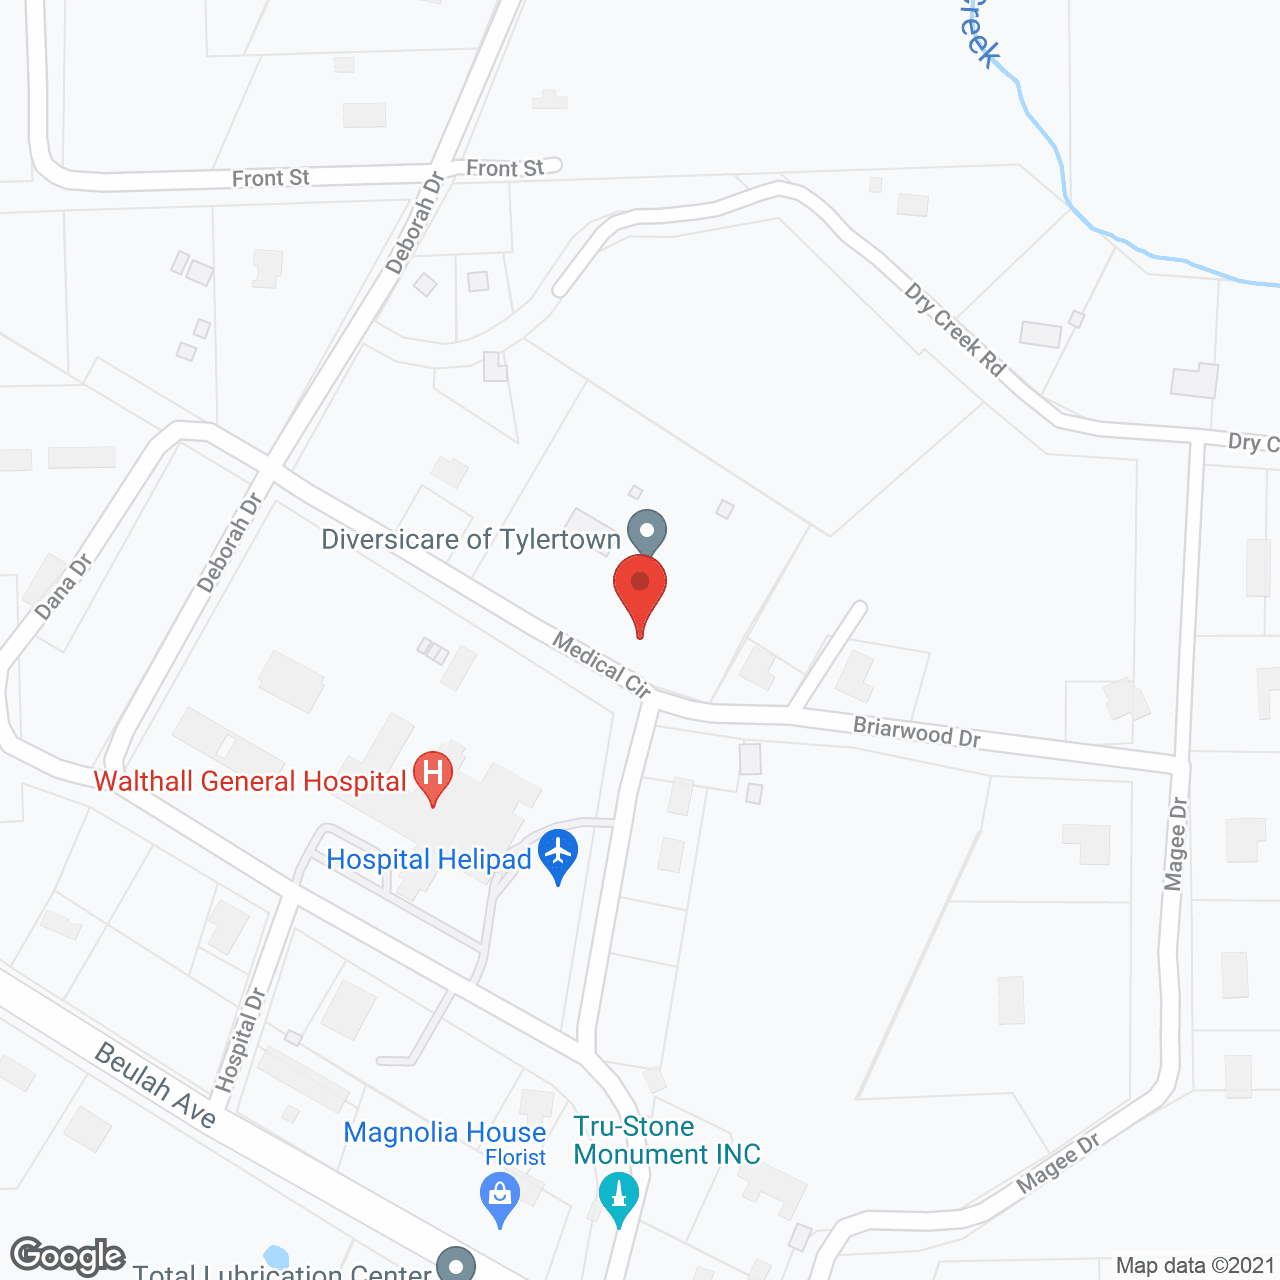 Golden LivingCenter - Tylertown in google map